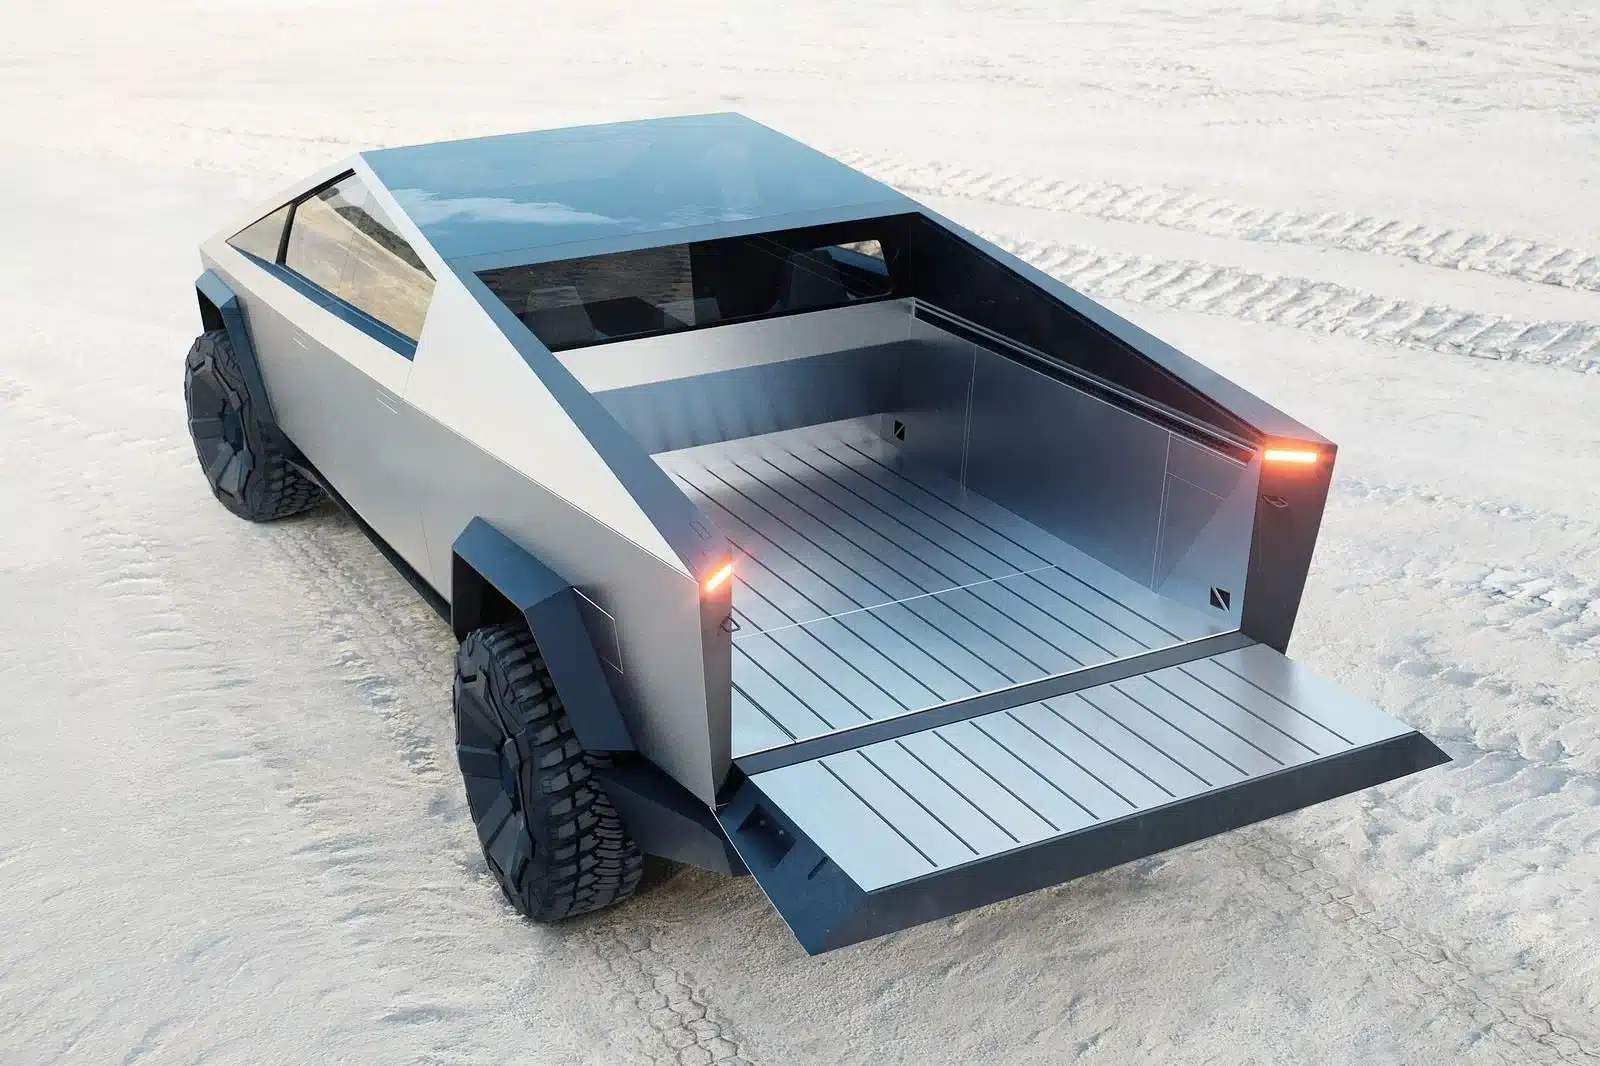 Tesla Cybertruck Prototype: Is The Bed Design A Letdown?